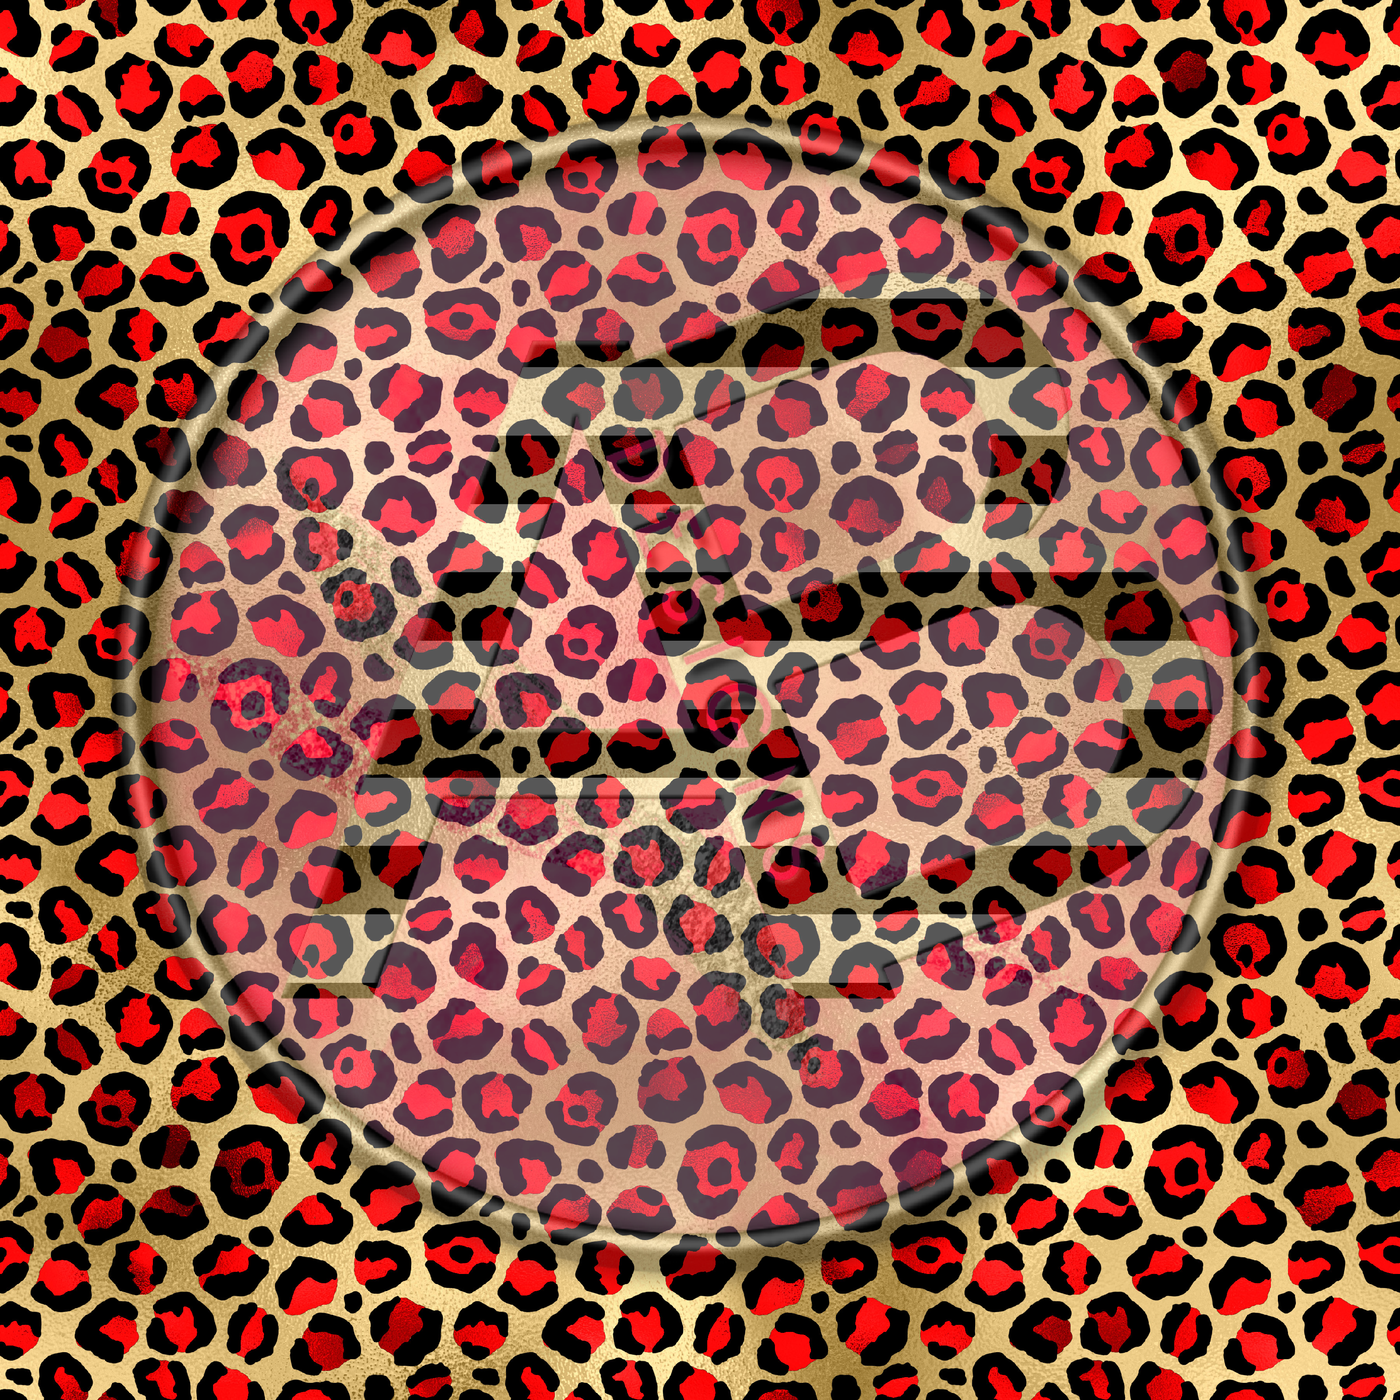 Adhesive Patterned Vinyl - Cheetah 210